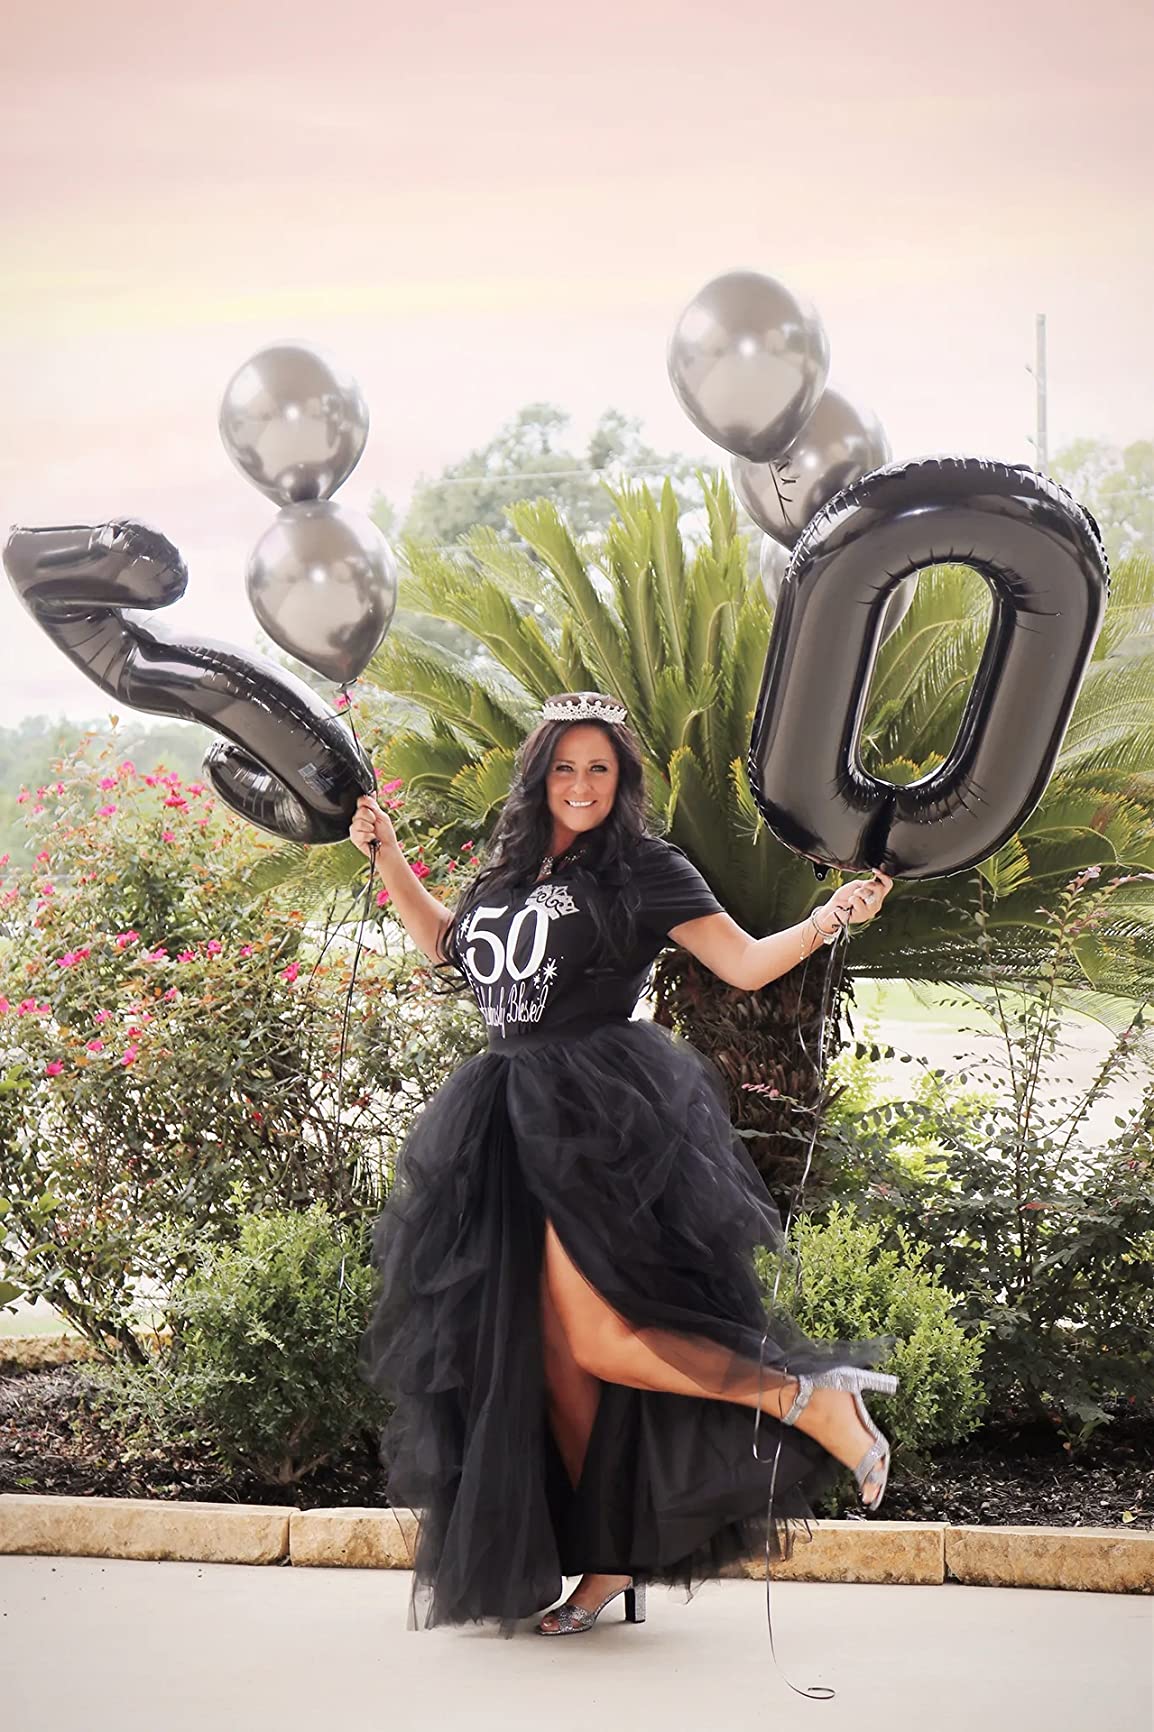 Birthday Photoshoot Idea with Balloons